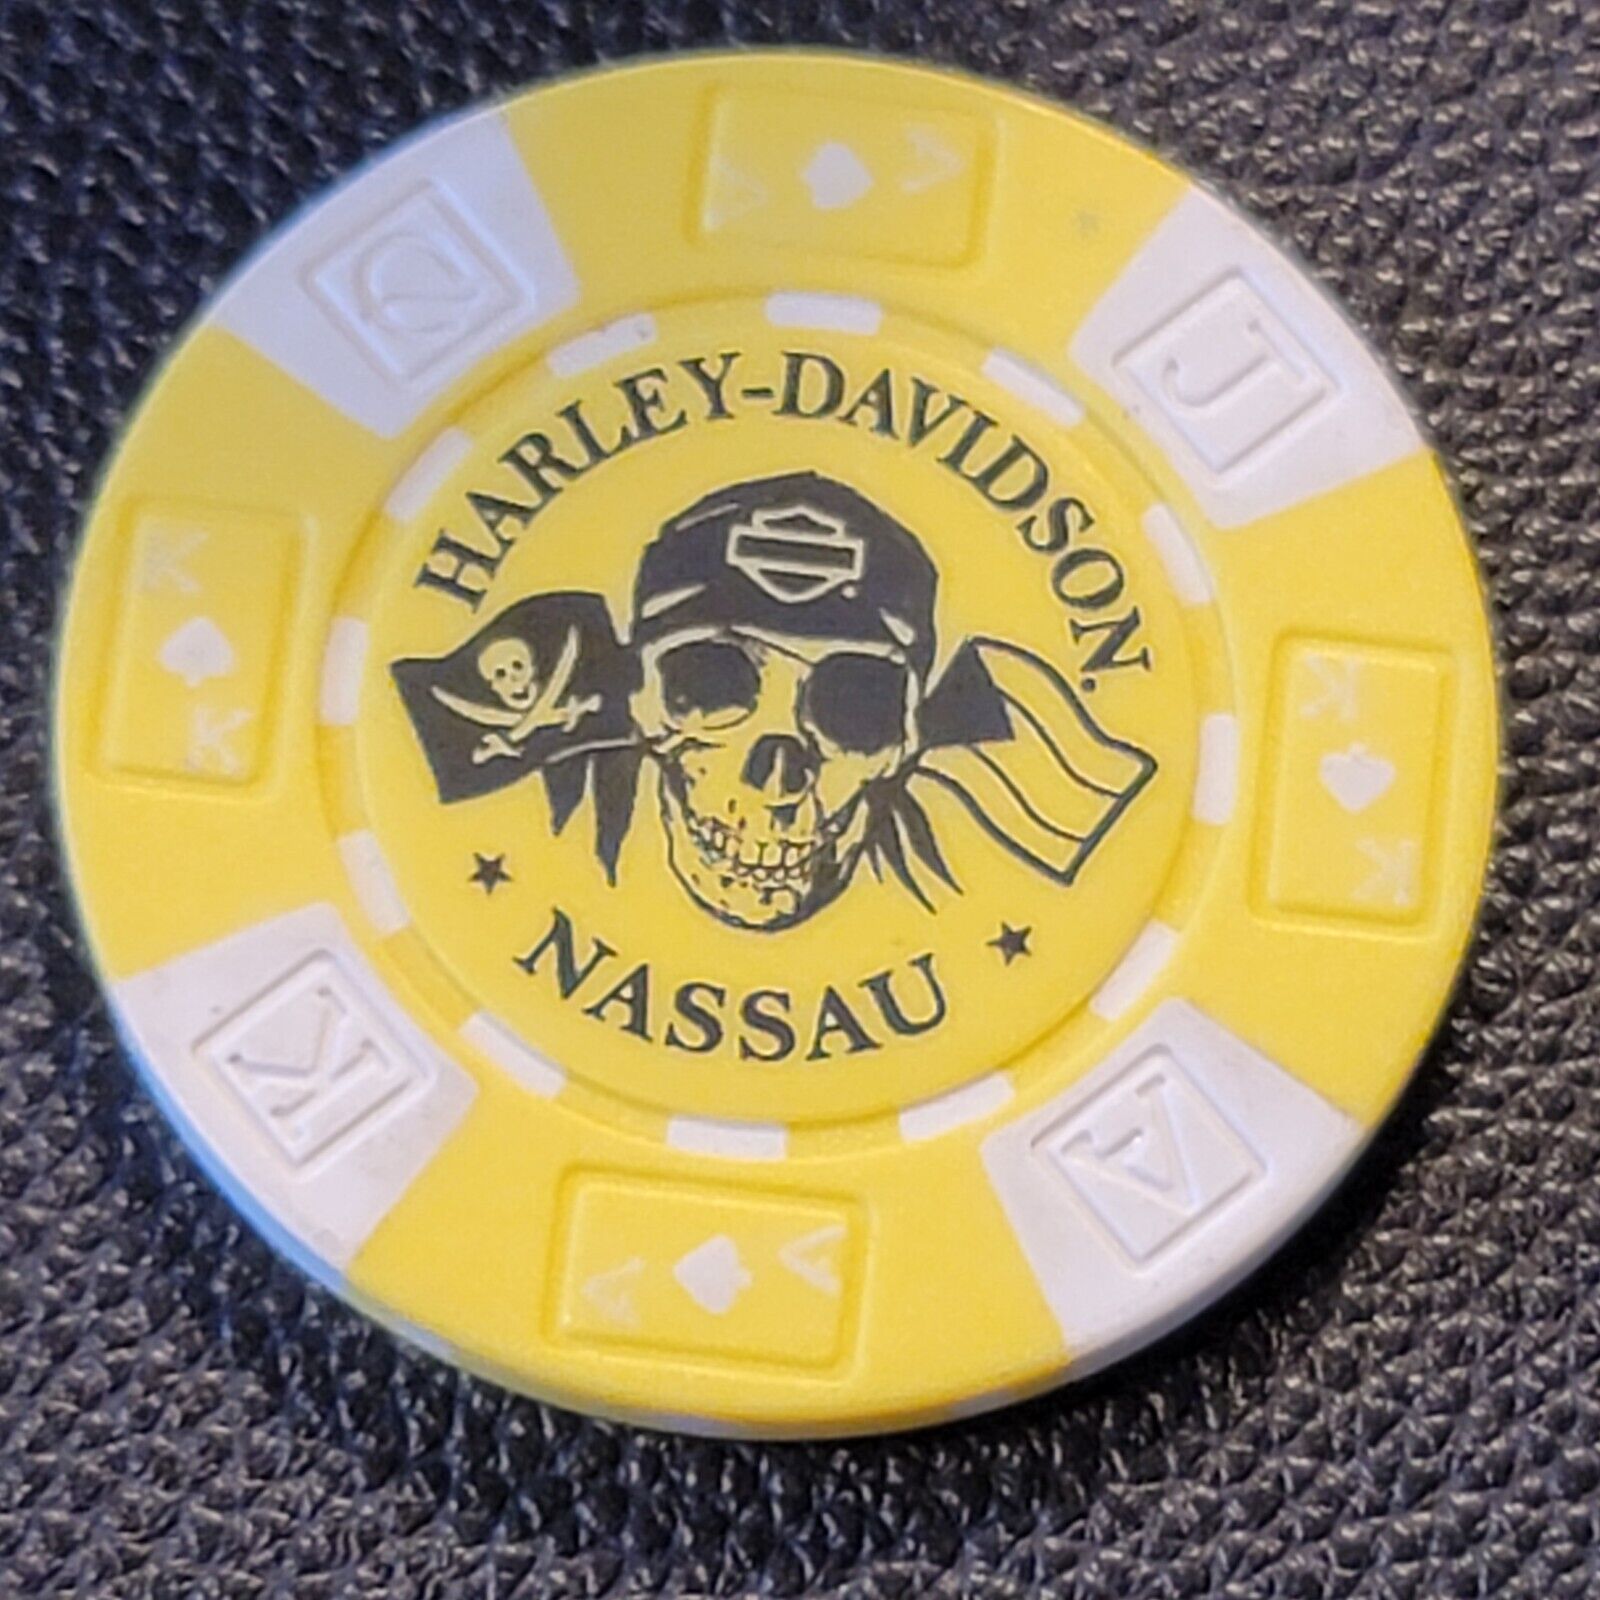 HD NASSAU ~ BAHAMAS (Yellow AKQJ) International Harley Davidson Poker Chip